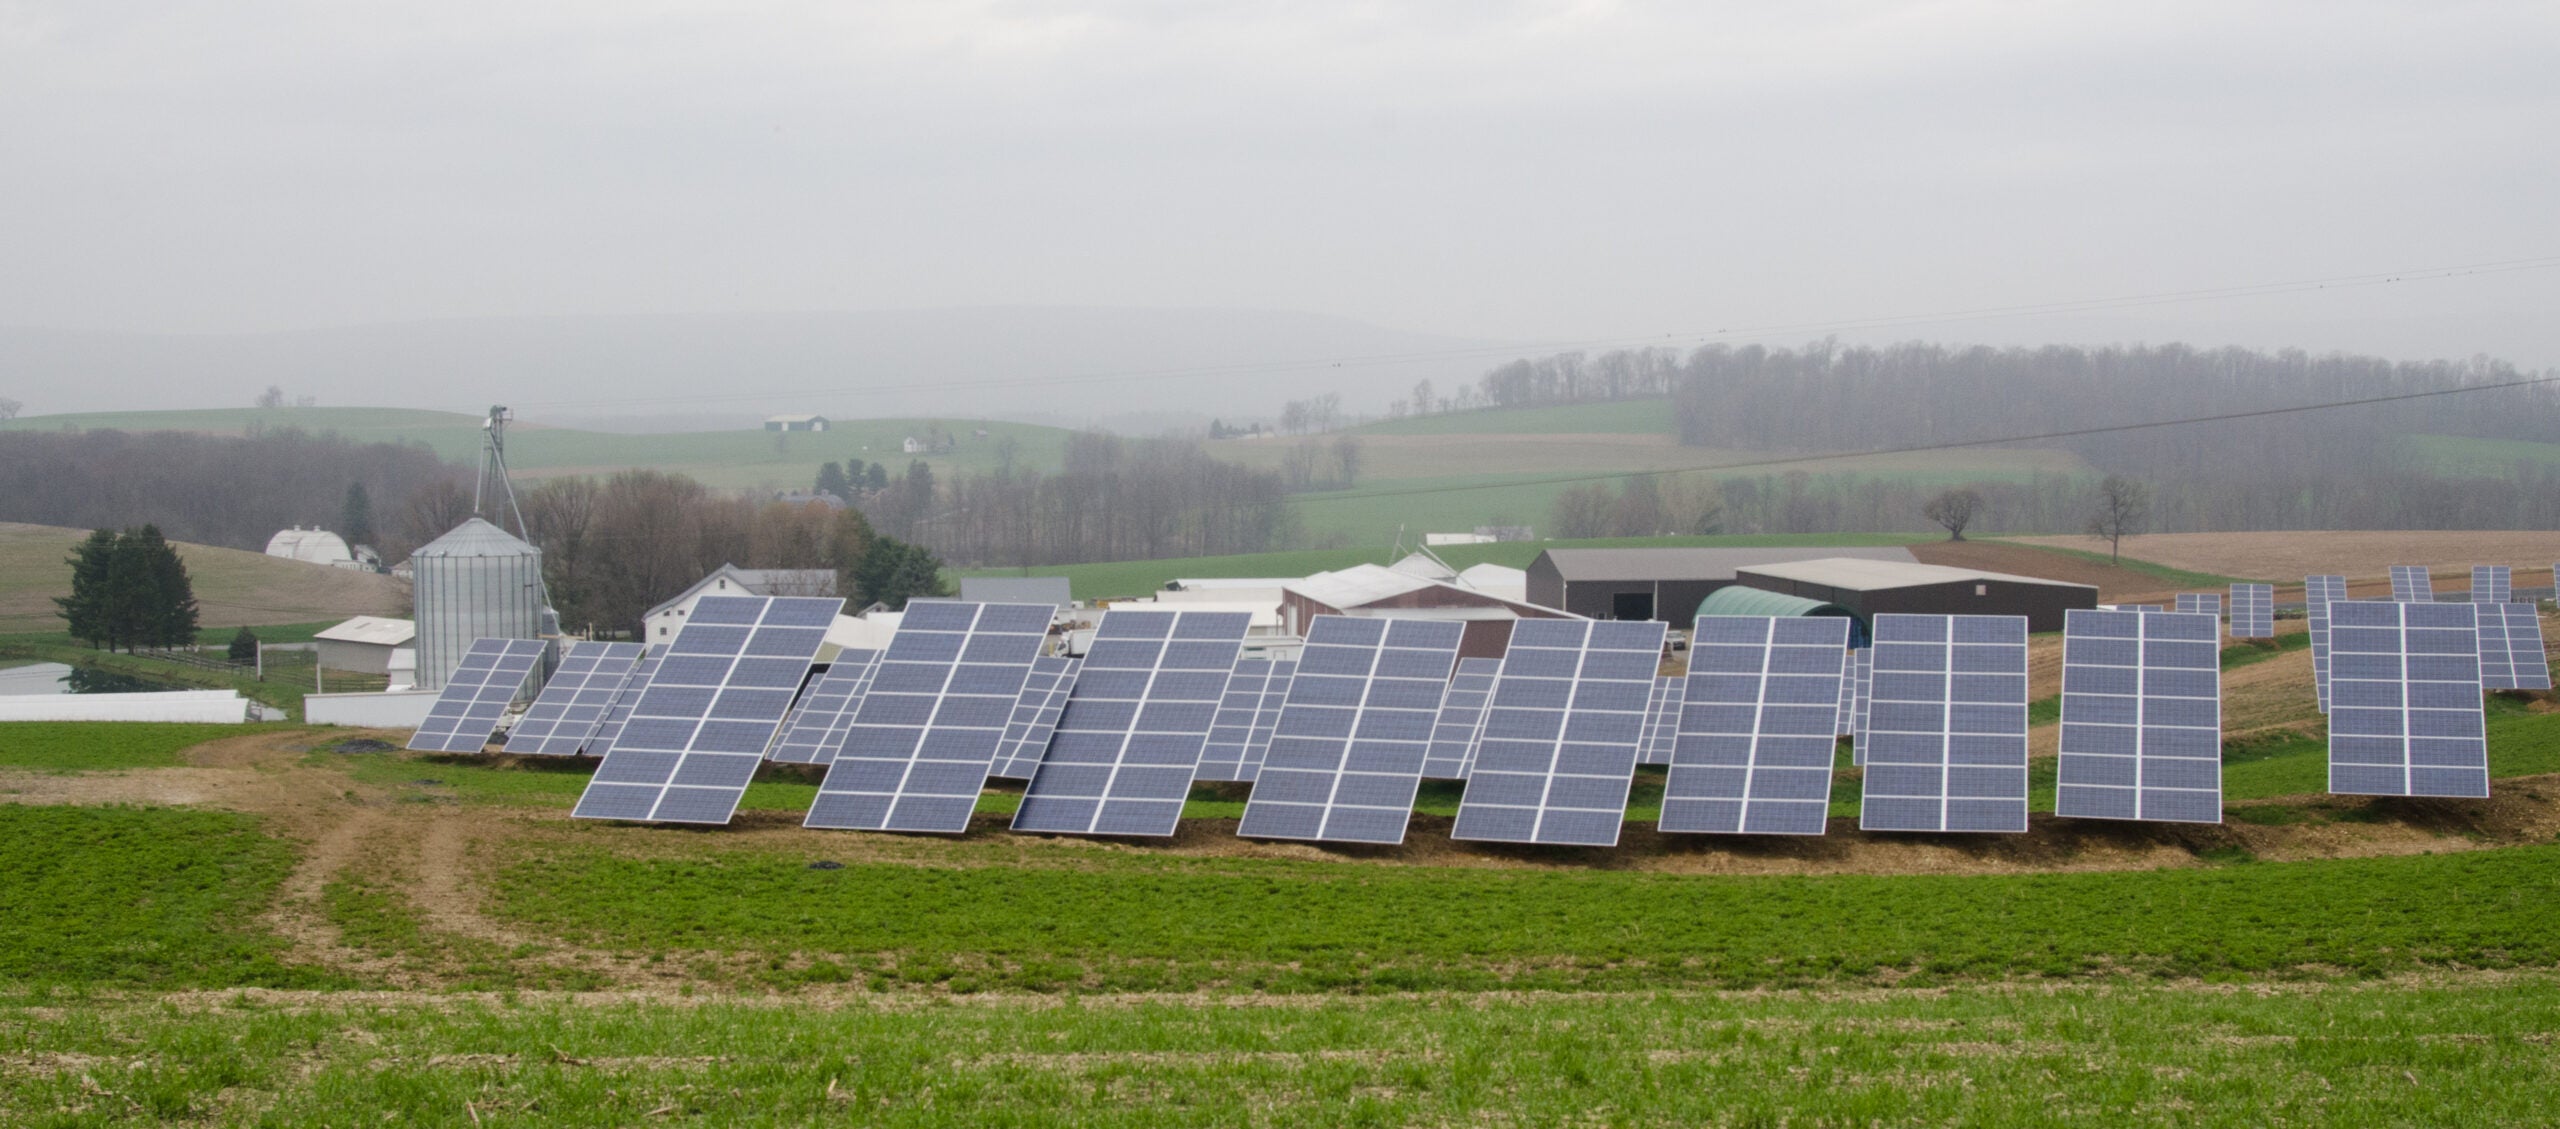 Farmland filled with solar panels on a foggy day